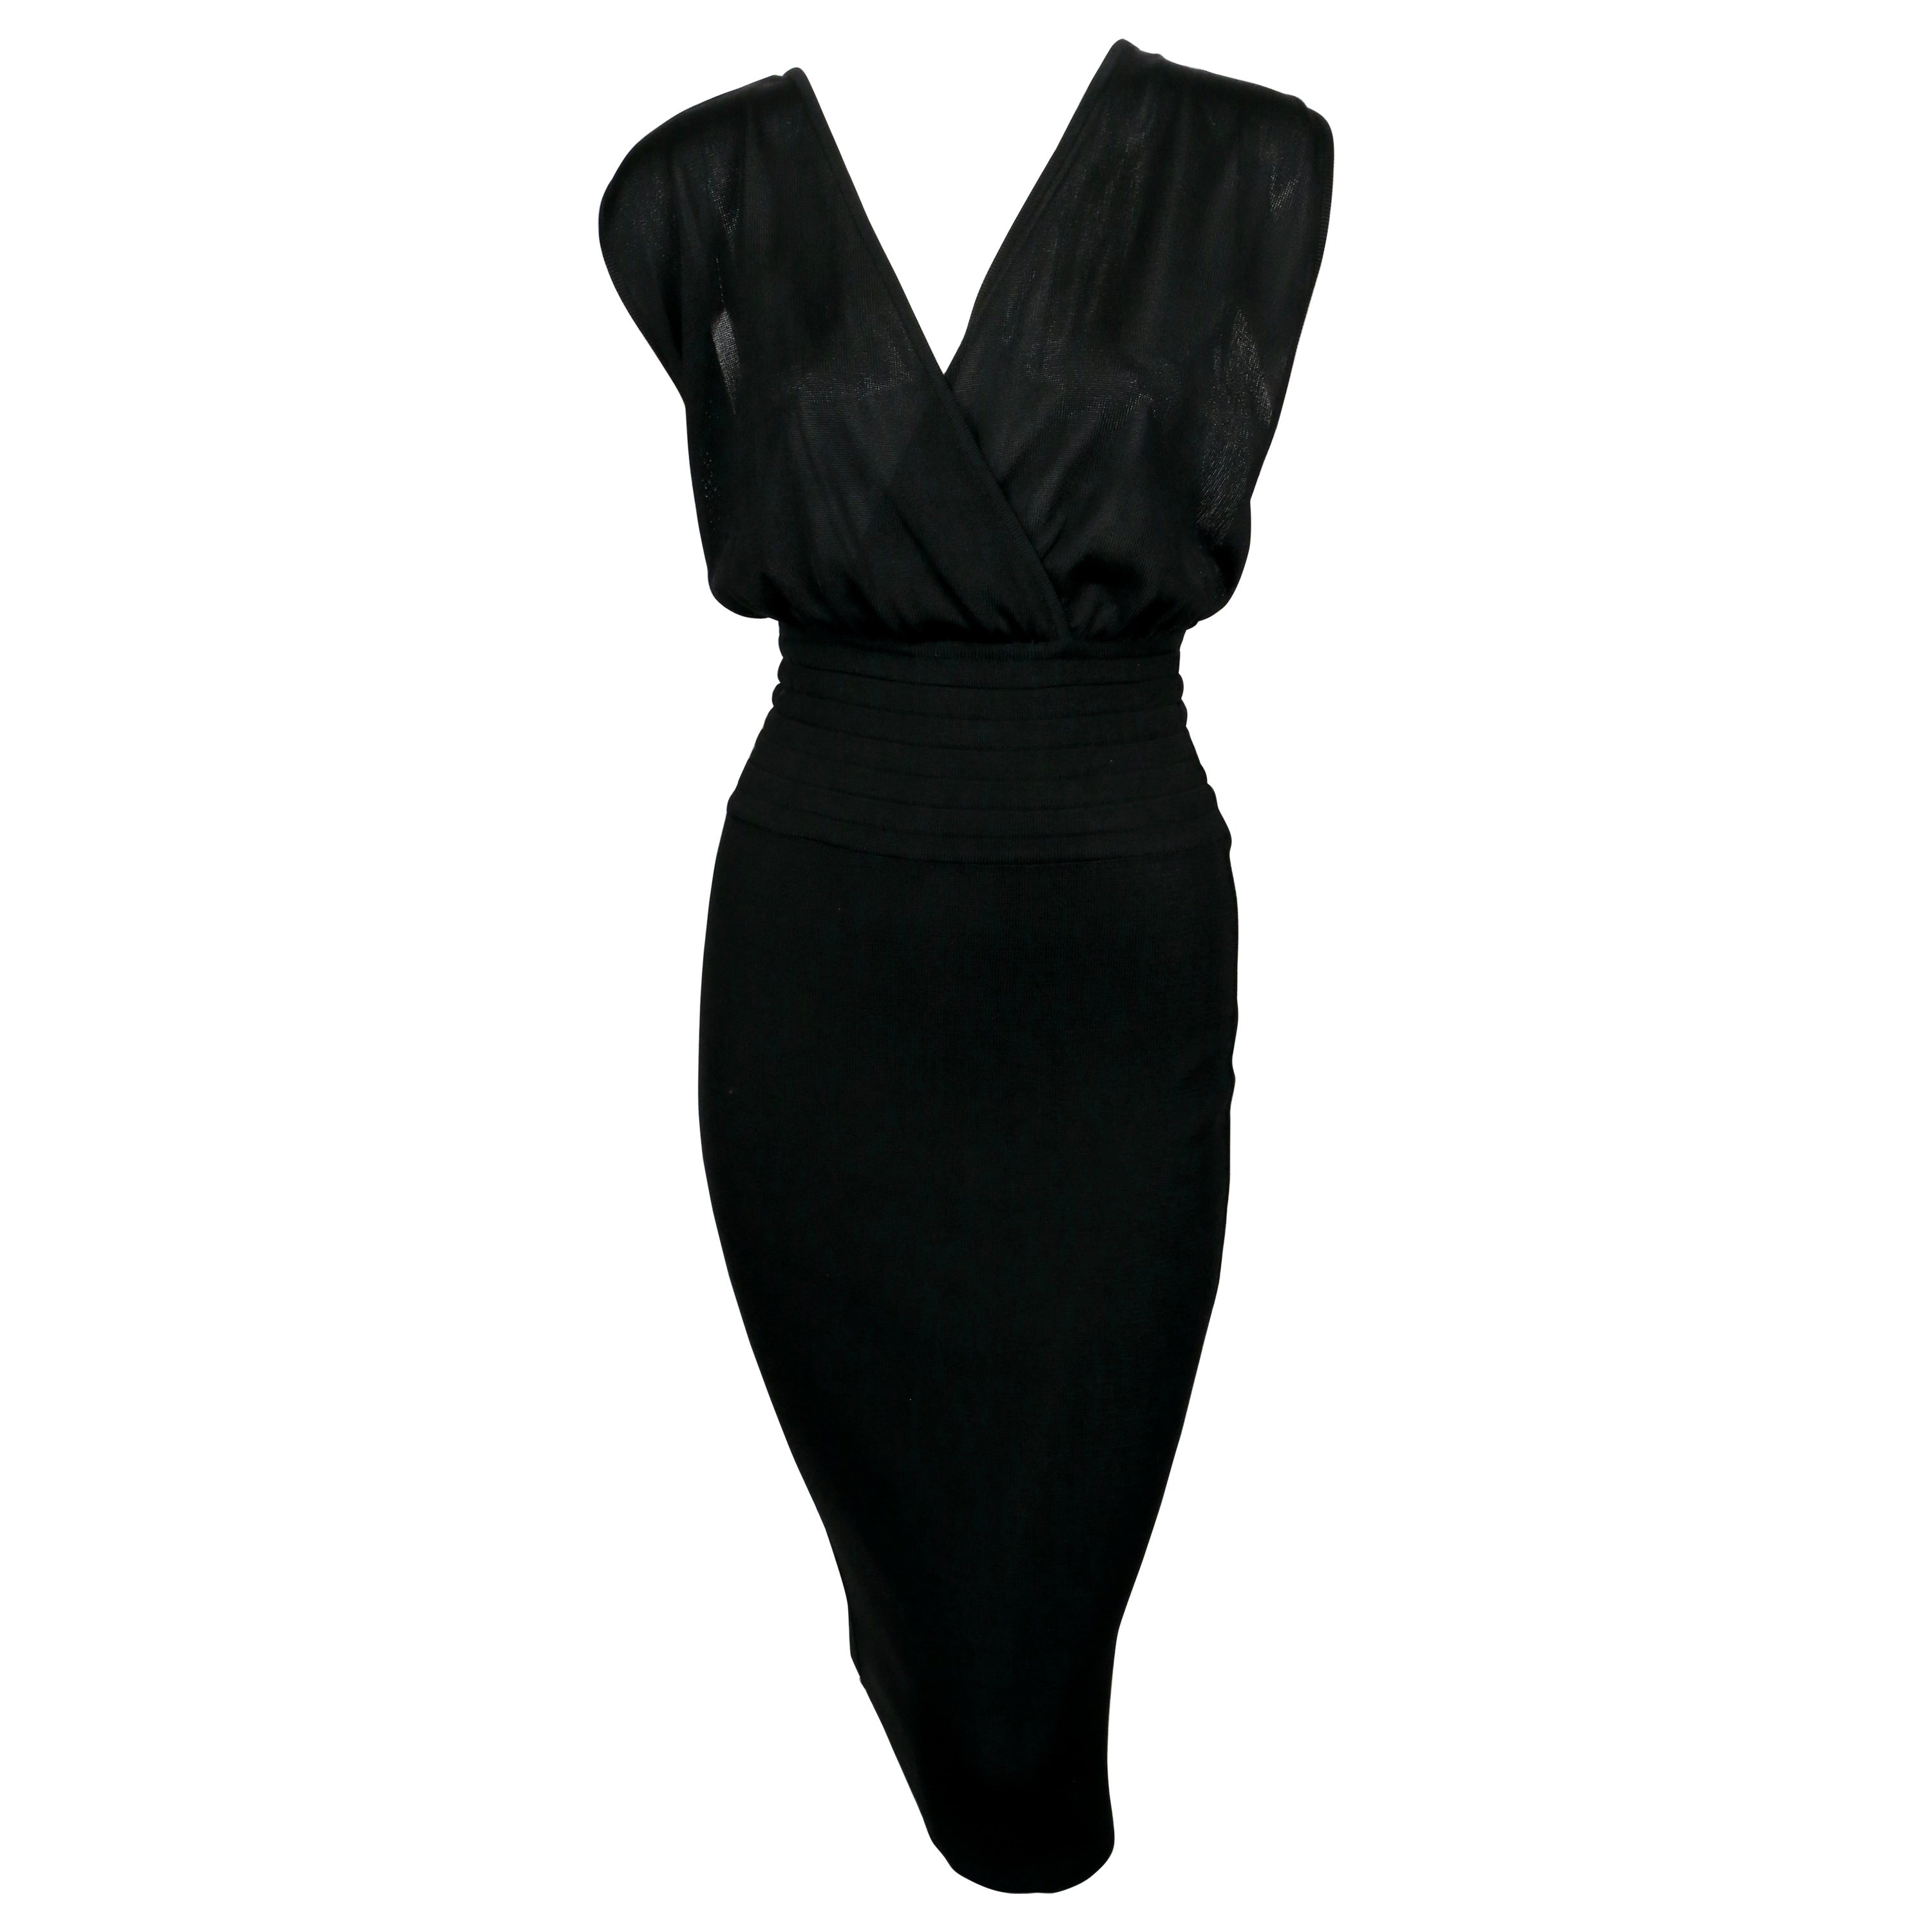 1984 AZZEDINE ALAIA black knit dress with wide elastic waistband For Sale